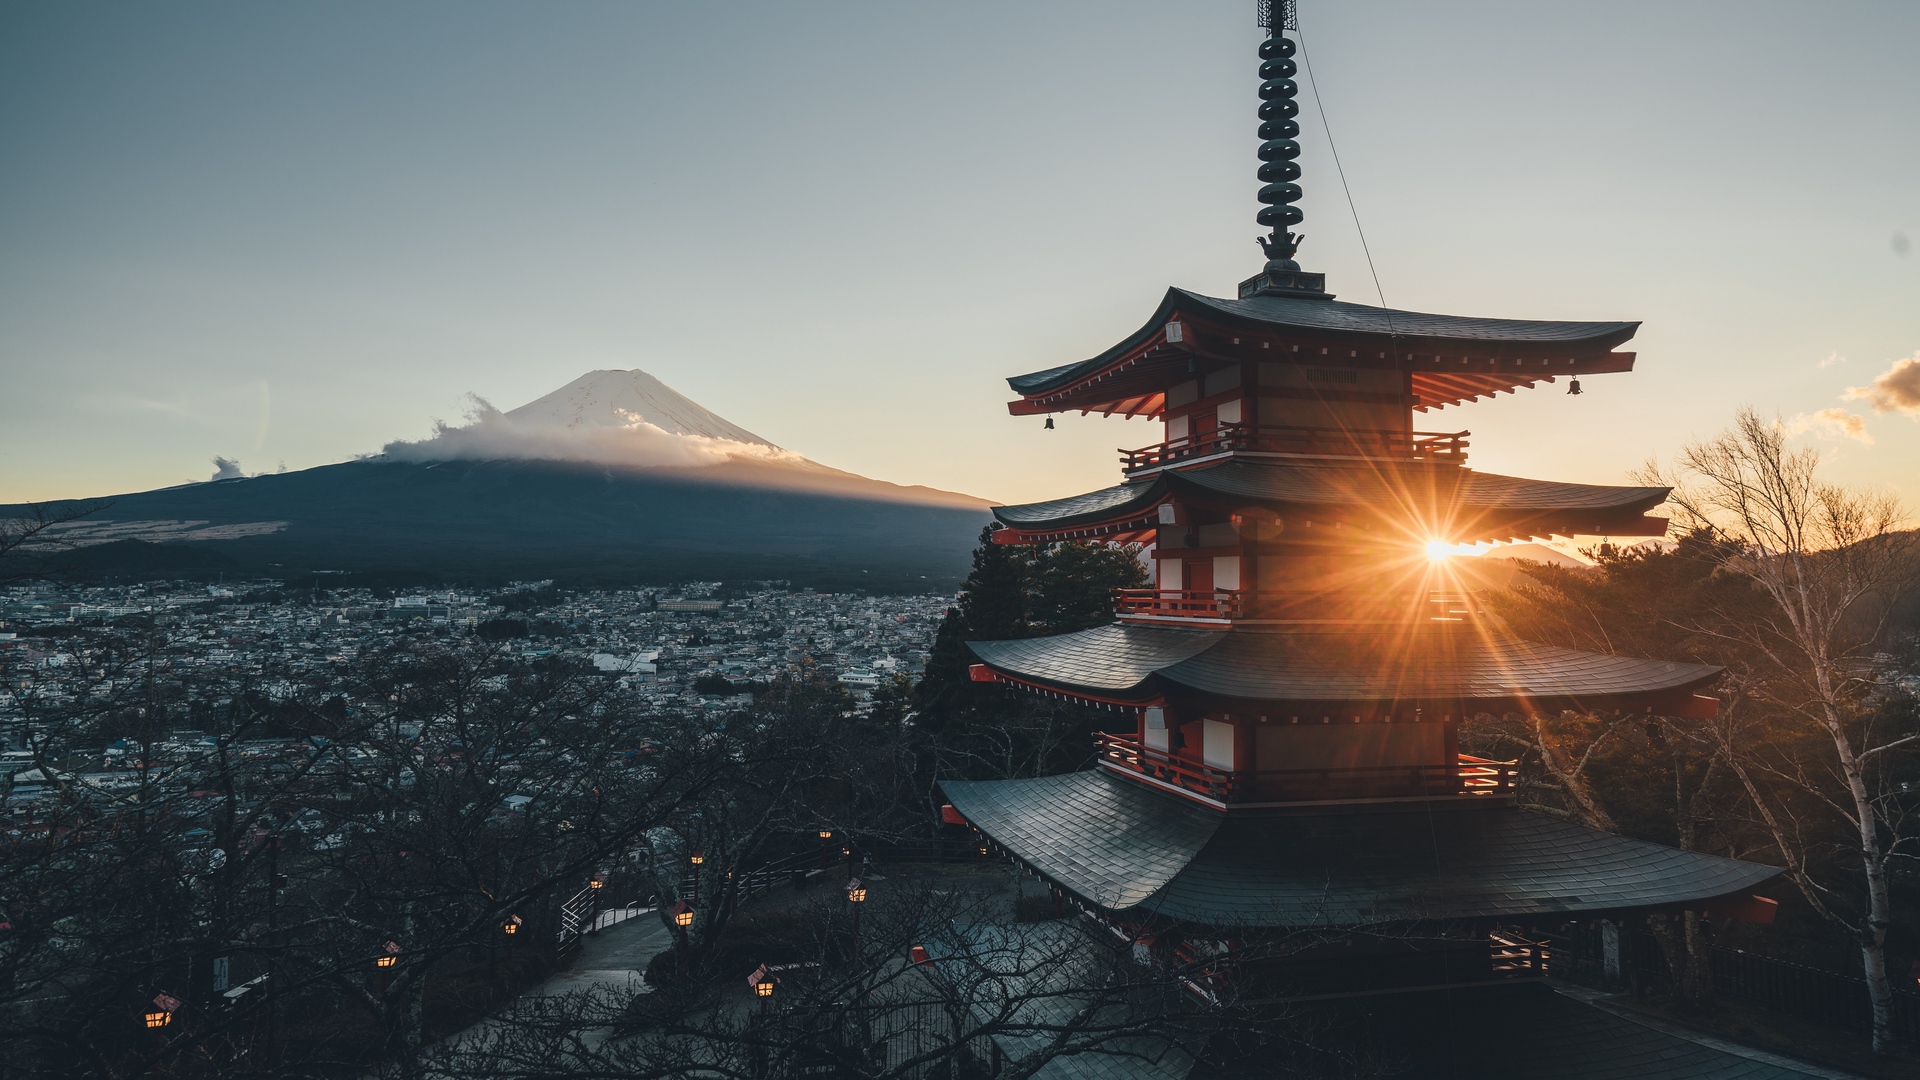 General 1920x1080 landscape mountains sunlight architecture pagoda cityscape optical flares volcano colorful Japan Mount Fuji Arakura Sengen